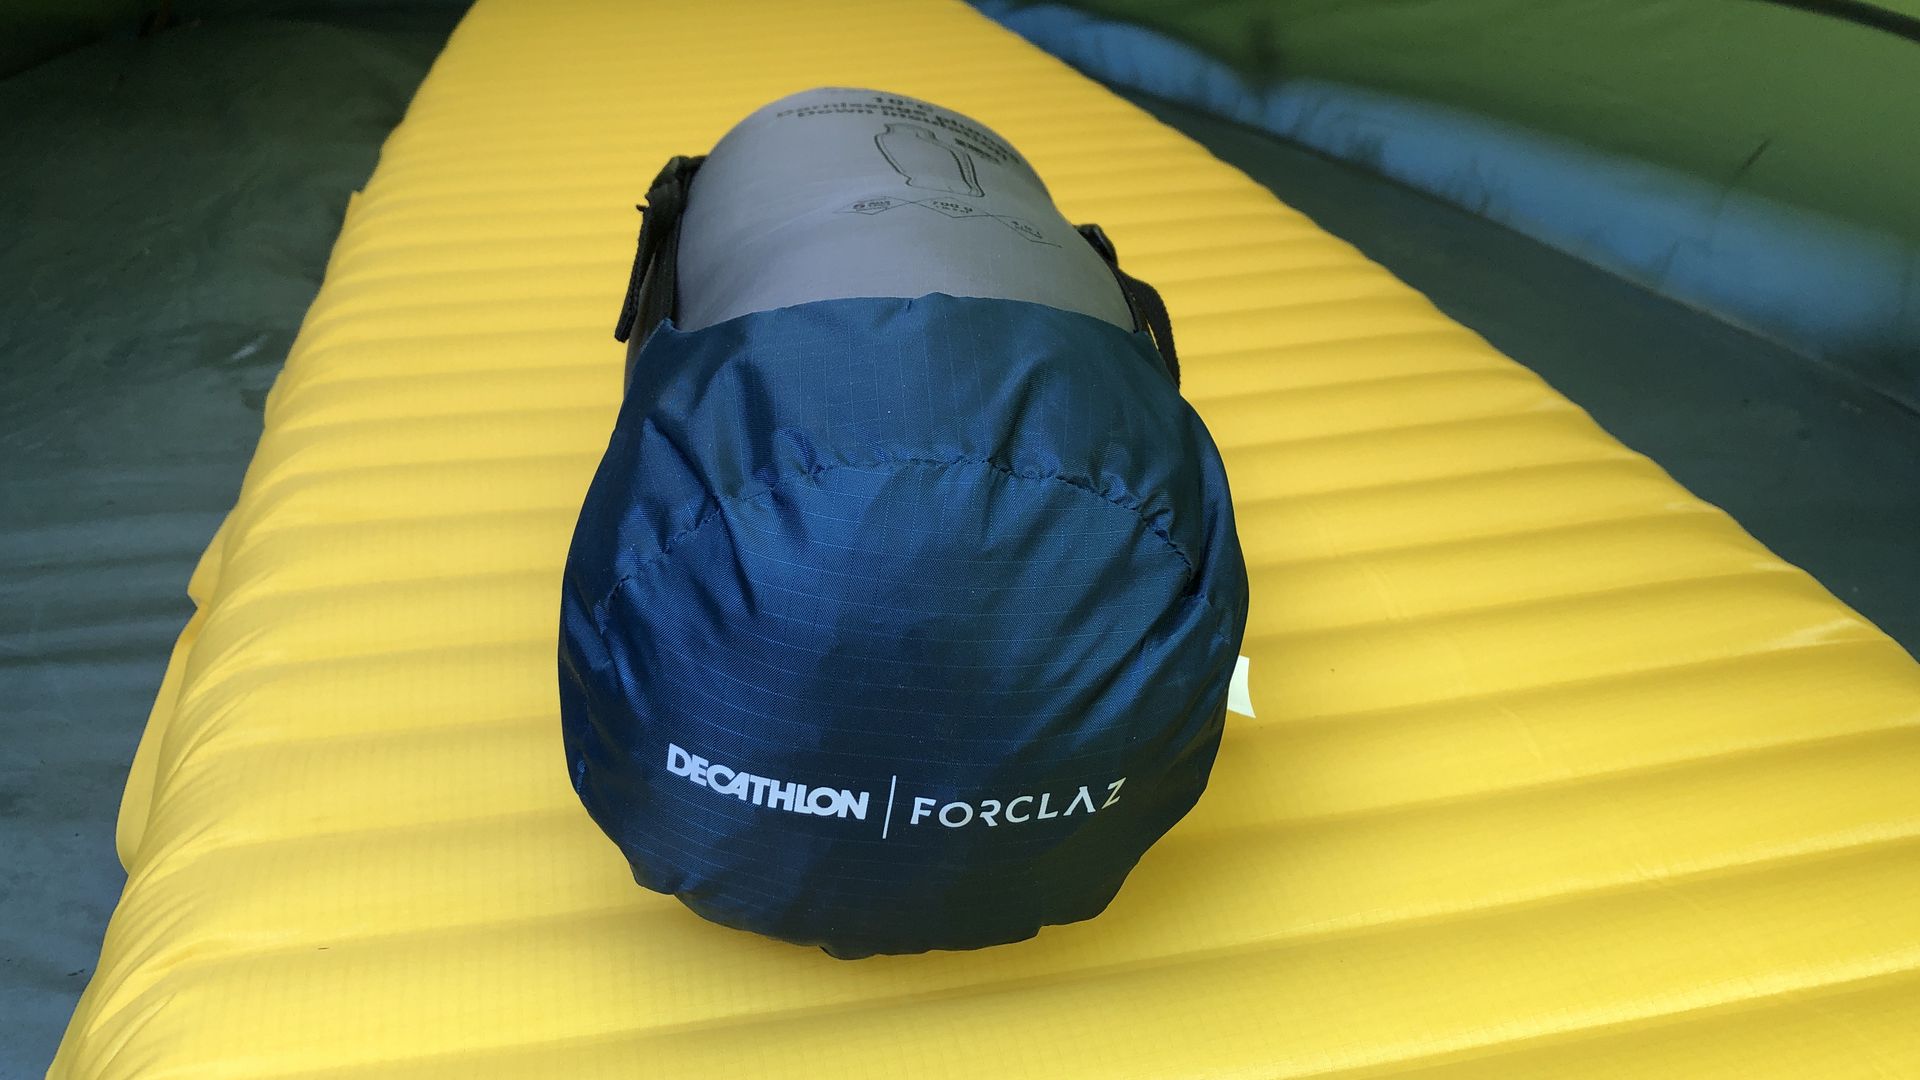 Decathlon Forclaz Trek MT900 10°C Sleeping Bag review | T3